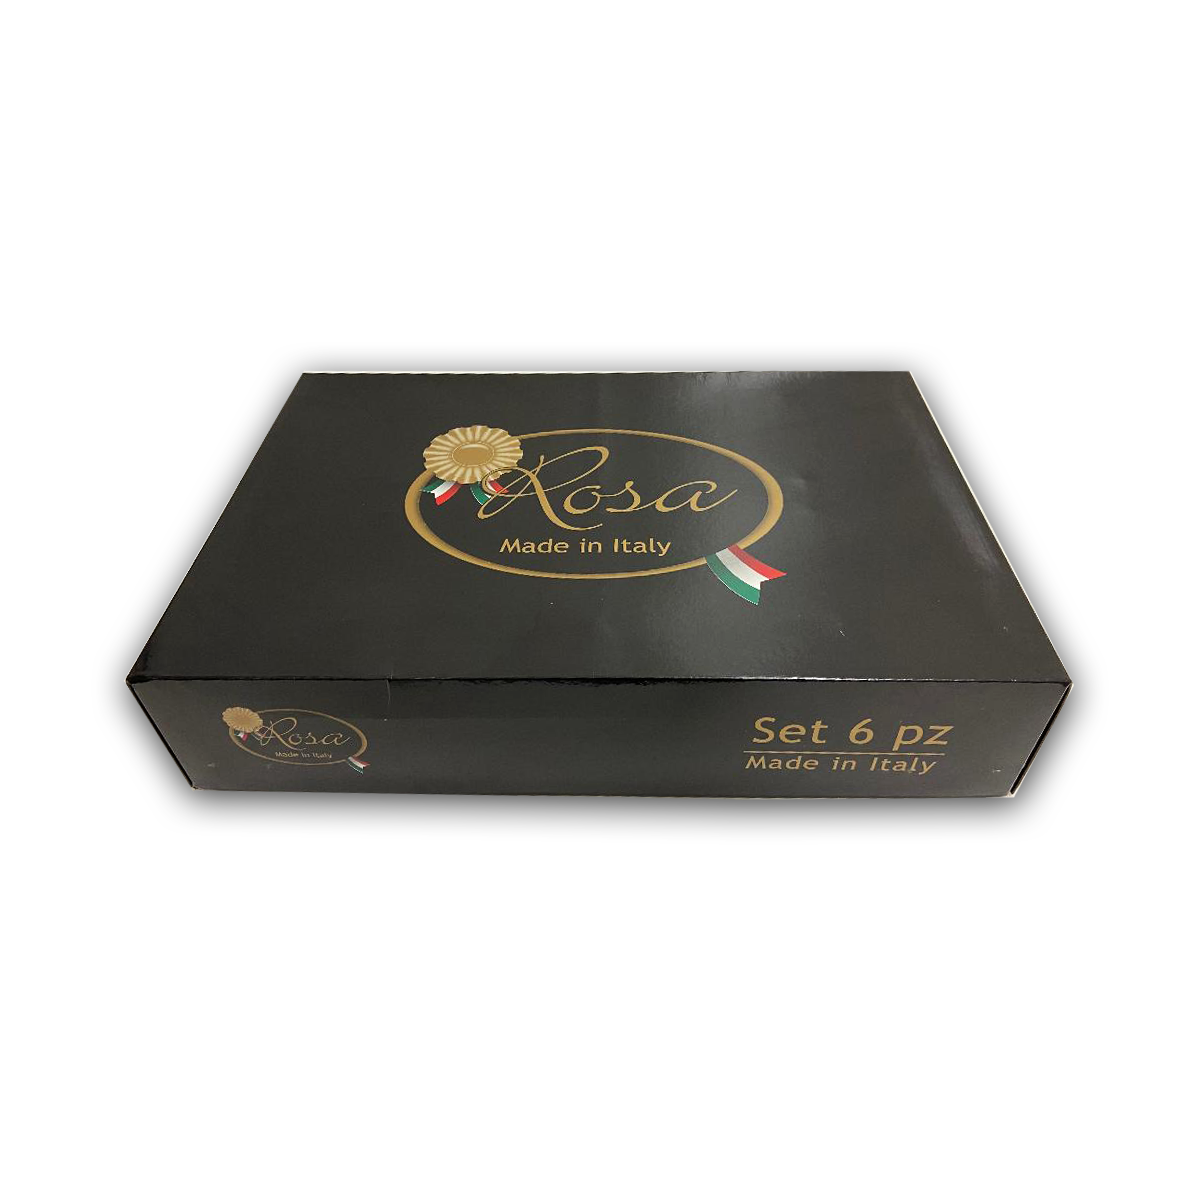 The Gold Edition glass 1 pcs designer box